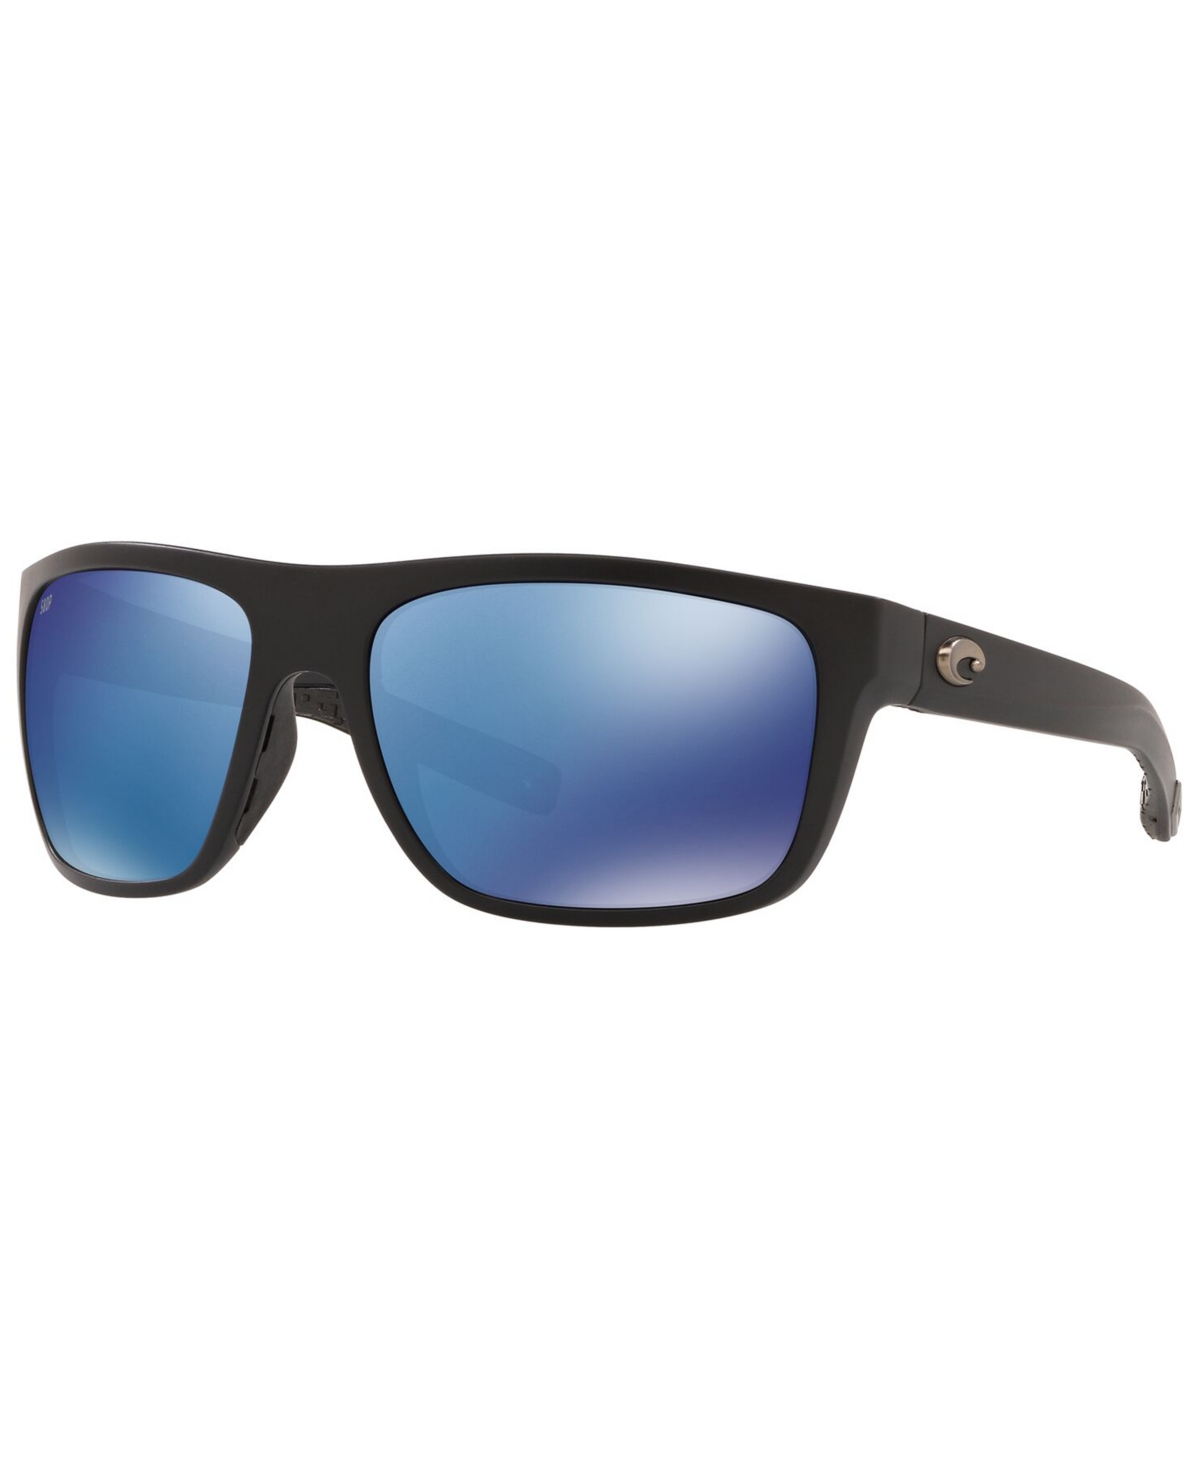 Men's Polarized Sunglasses, Broadbill 61 - BLK /BLUE POL